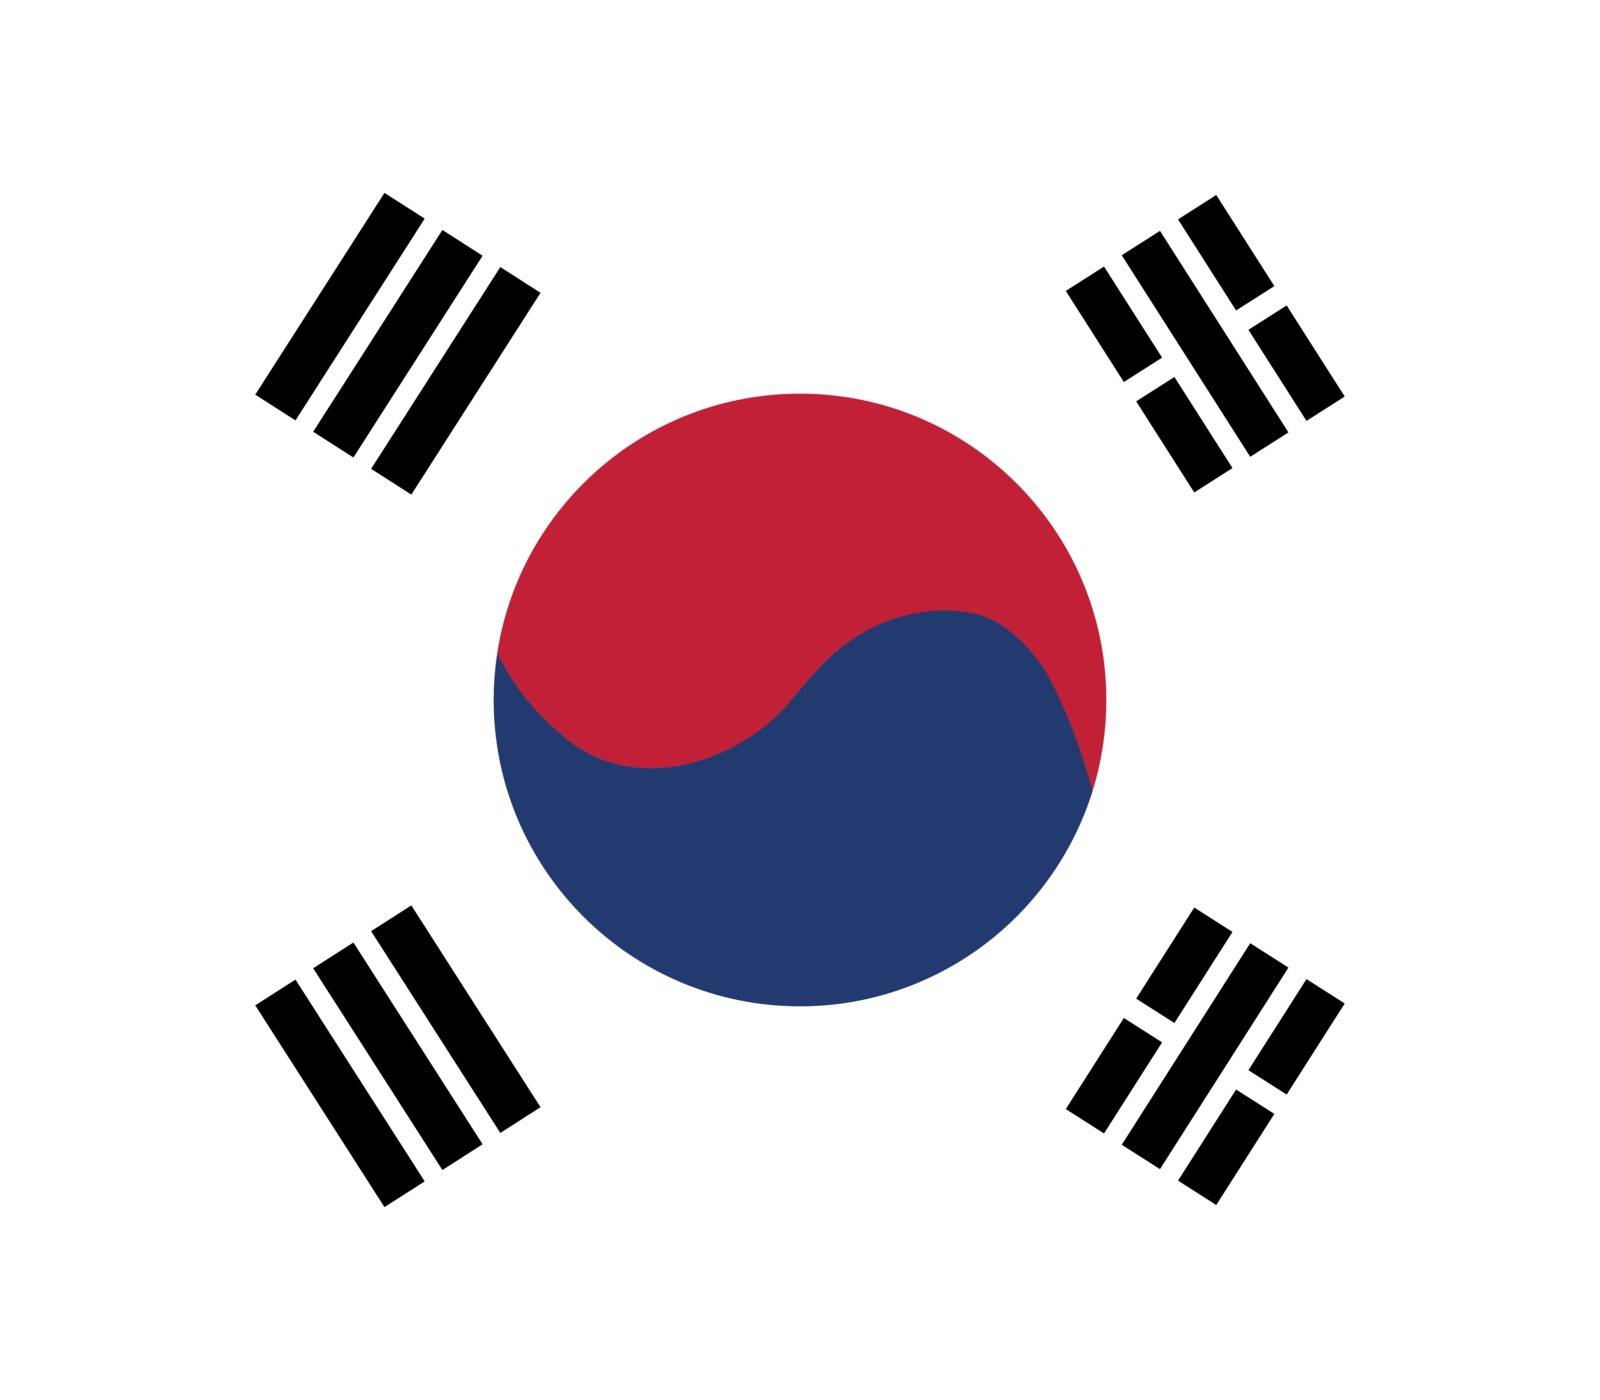 south korea flag by Mark1987